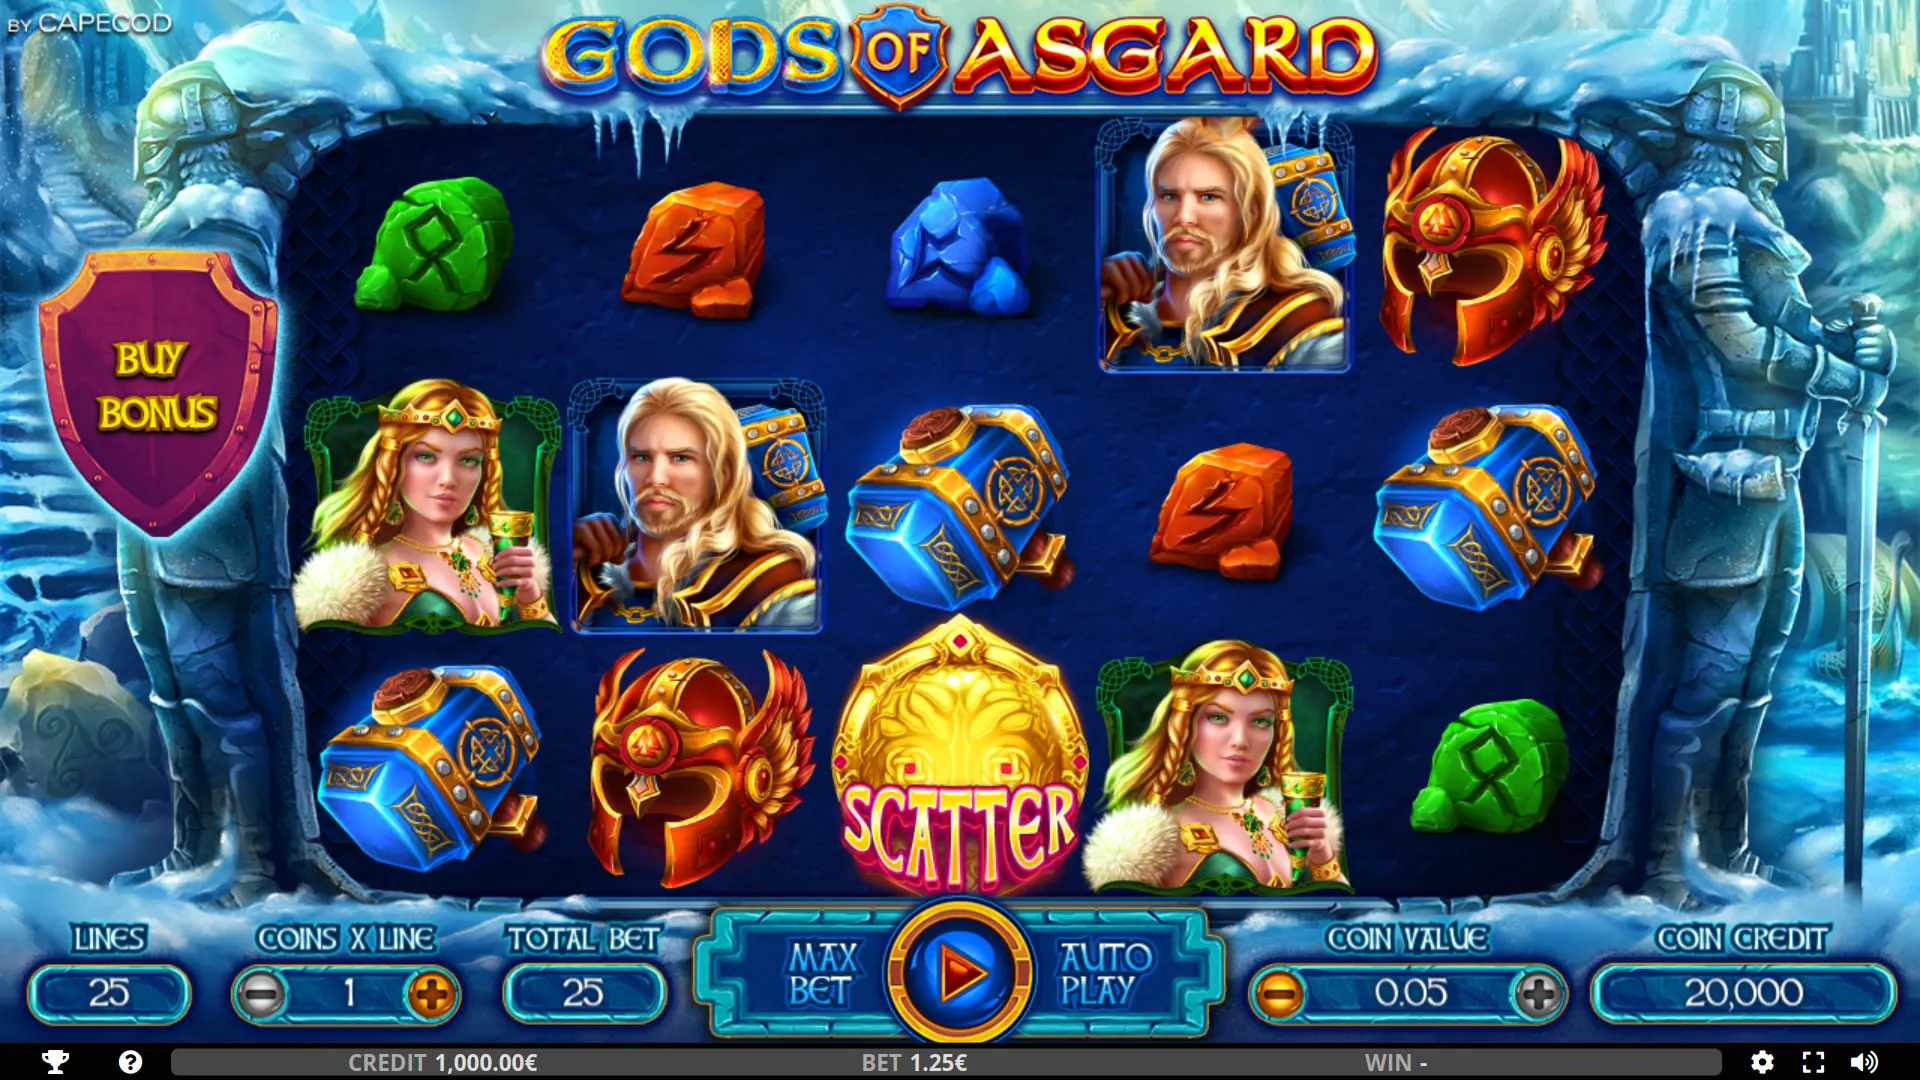 Gods of Asgard Theme